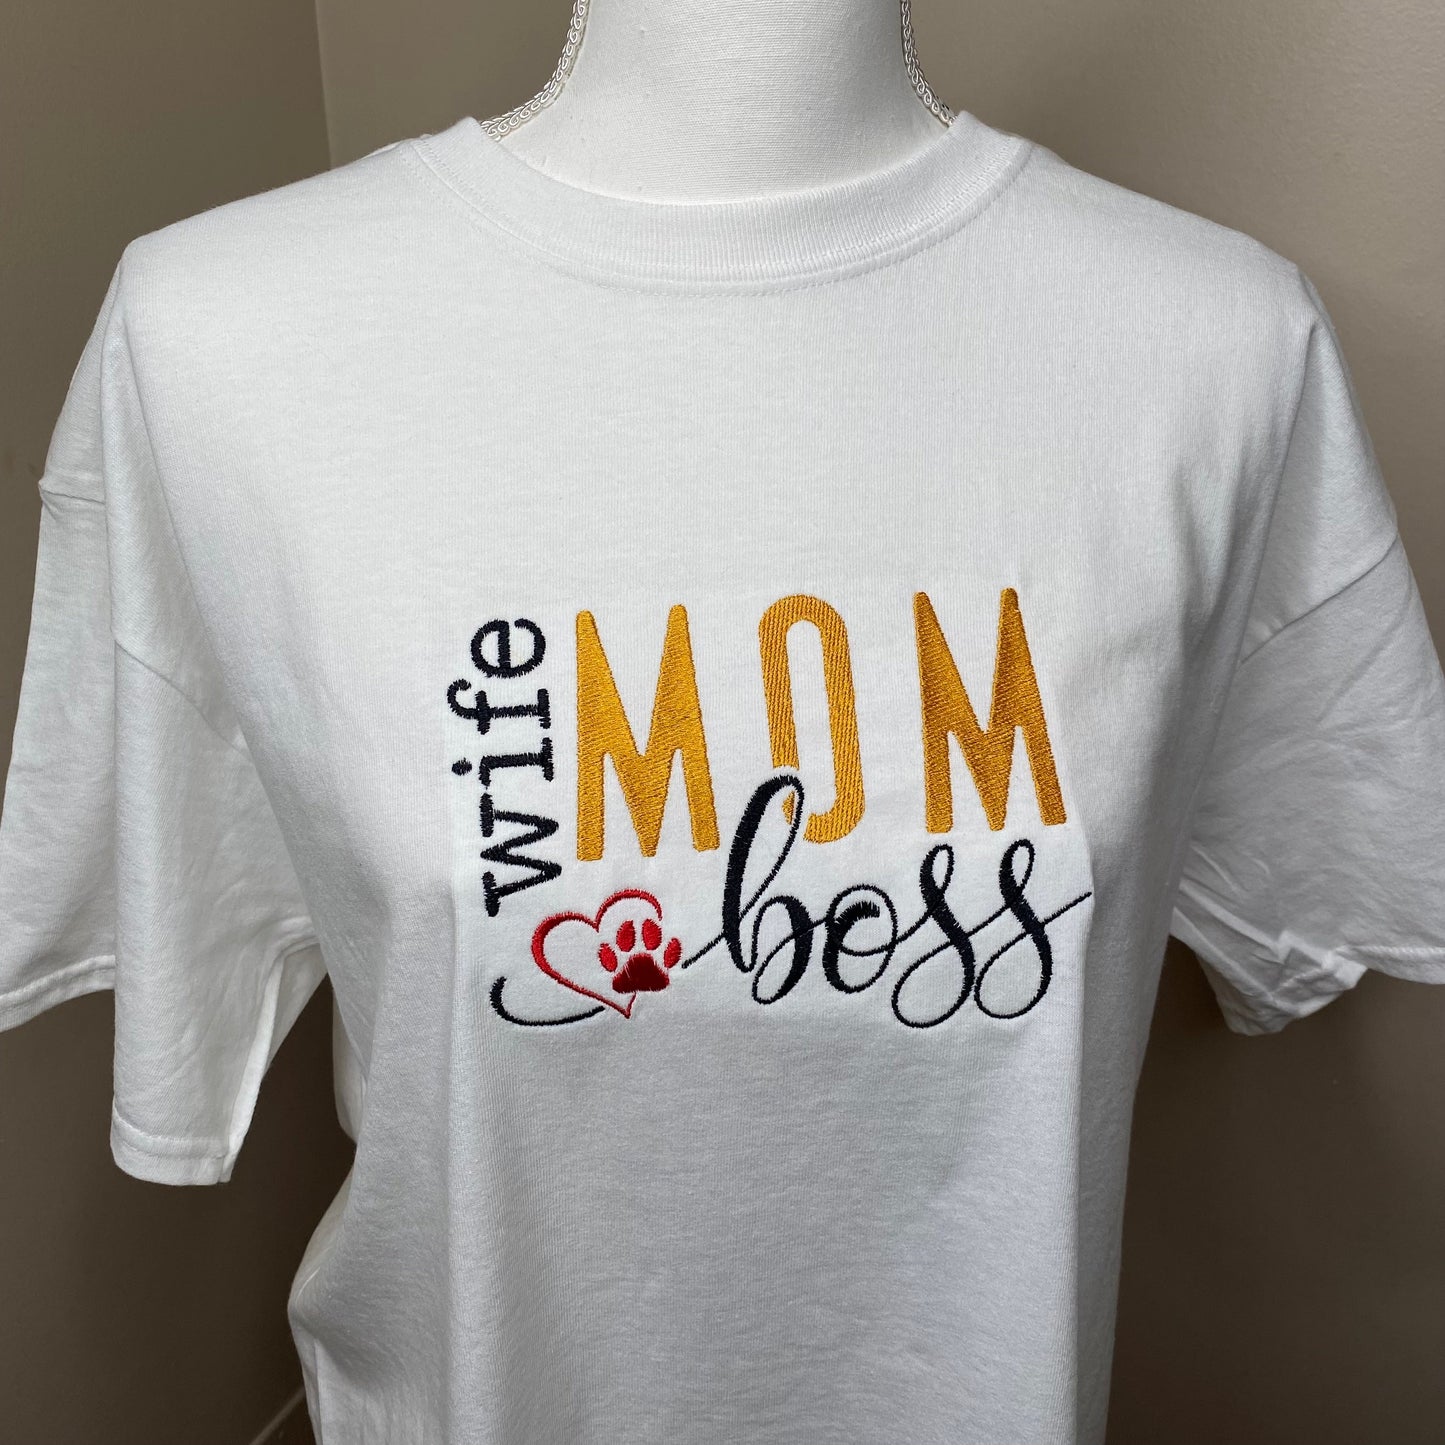 Wife Mom Boss,  Embroidered, Custom T-Shirt, Church Going